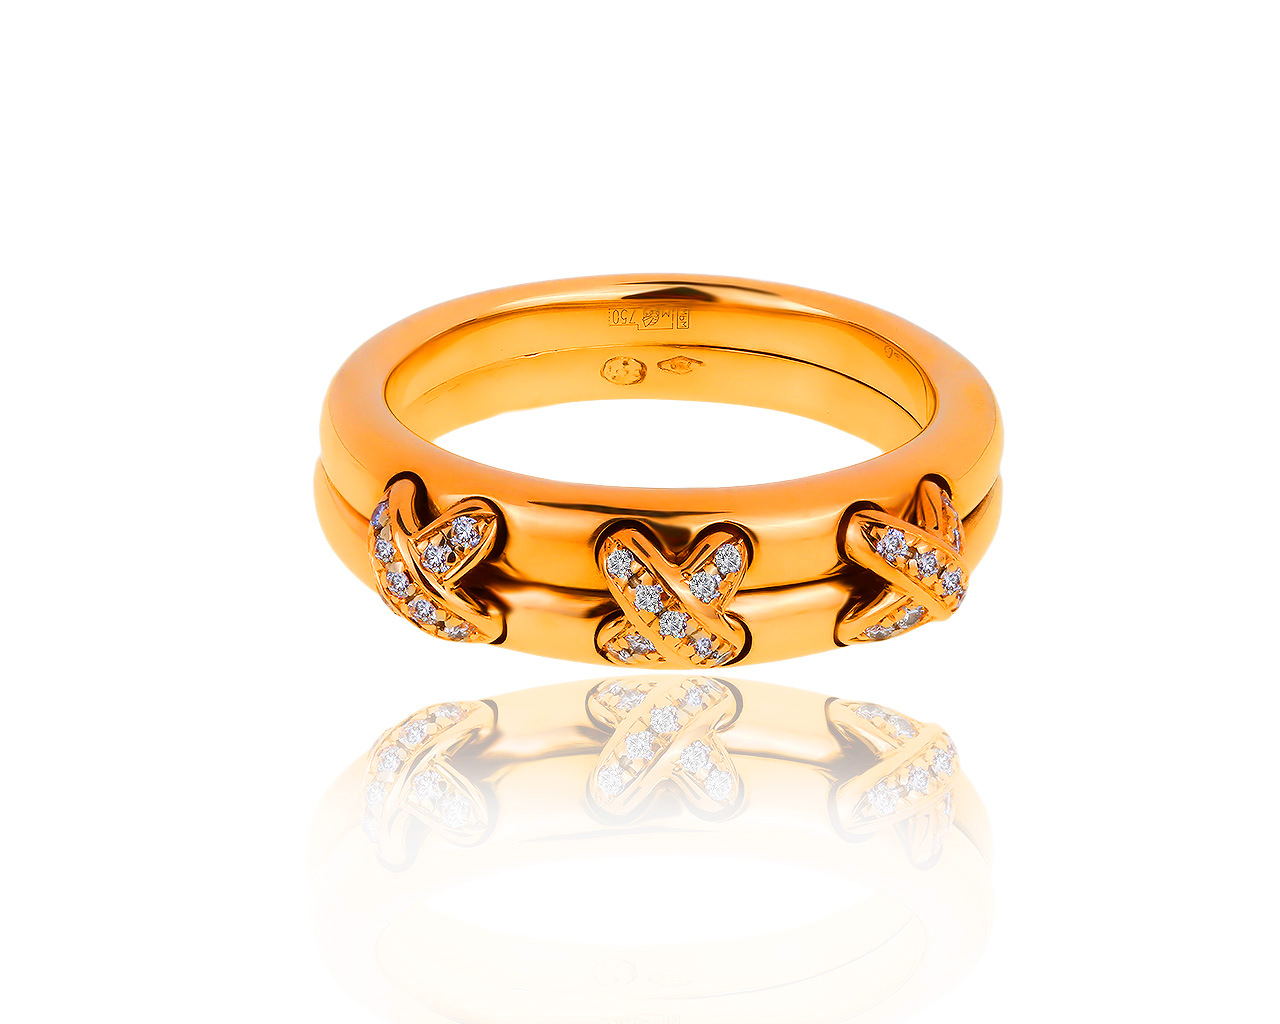 Интересное золотое кольцо с бриллиантами 0.16ct Chaumet Liense